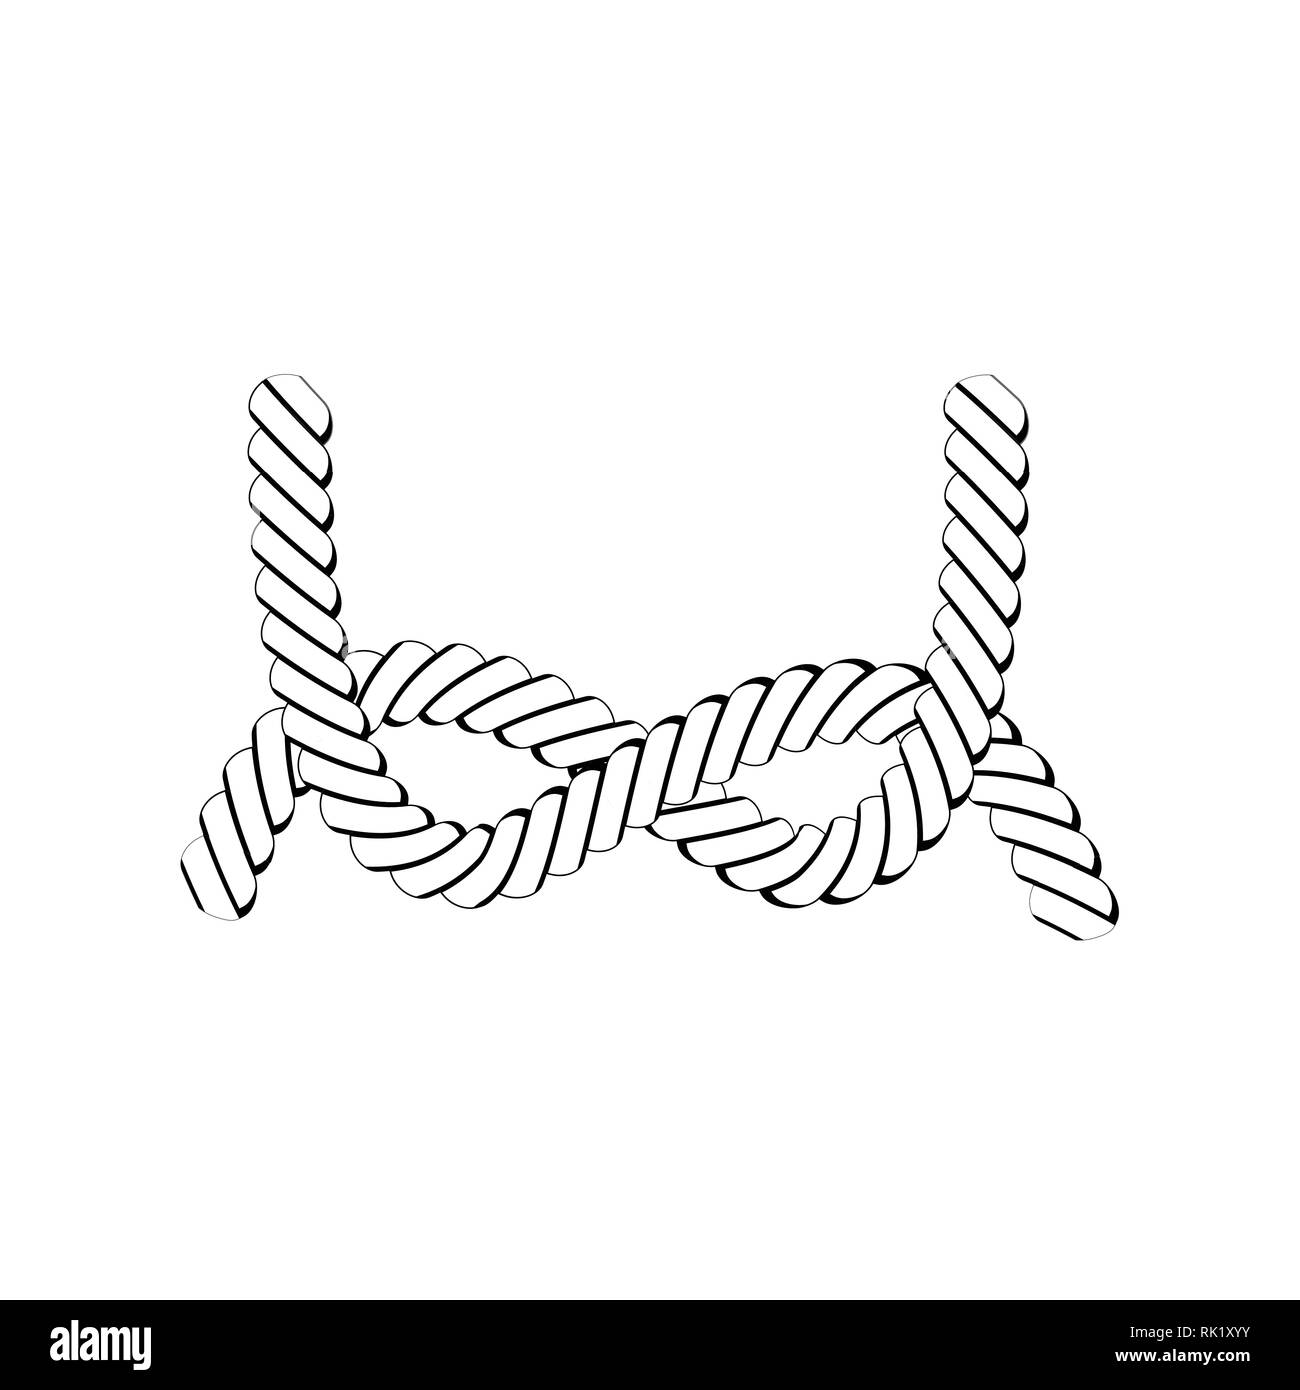 https://c8.alamy.com/comp/RK1XYY/vector-illustration-nautical-rope-knots-decorative-vintage-element-RK1XYY.jpg